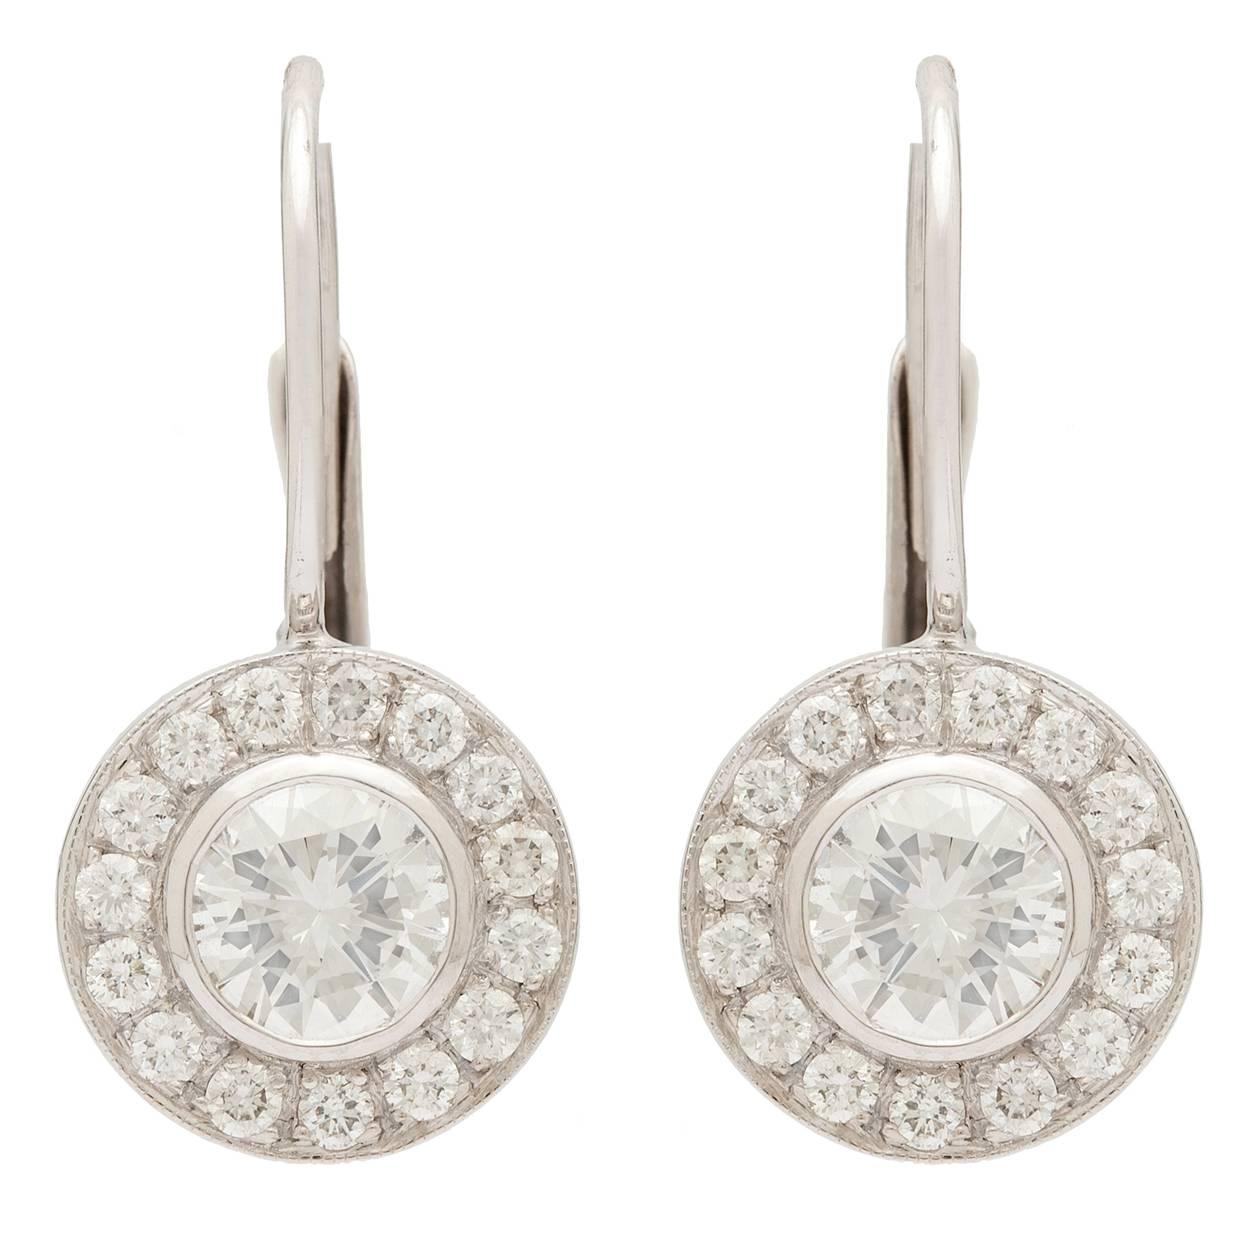 2.06 Carat GIA Certified Round Brilliant Diamonds Platinum Halo Earrings